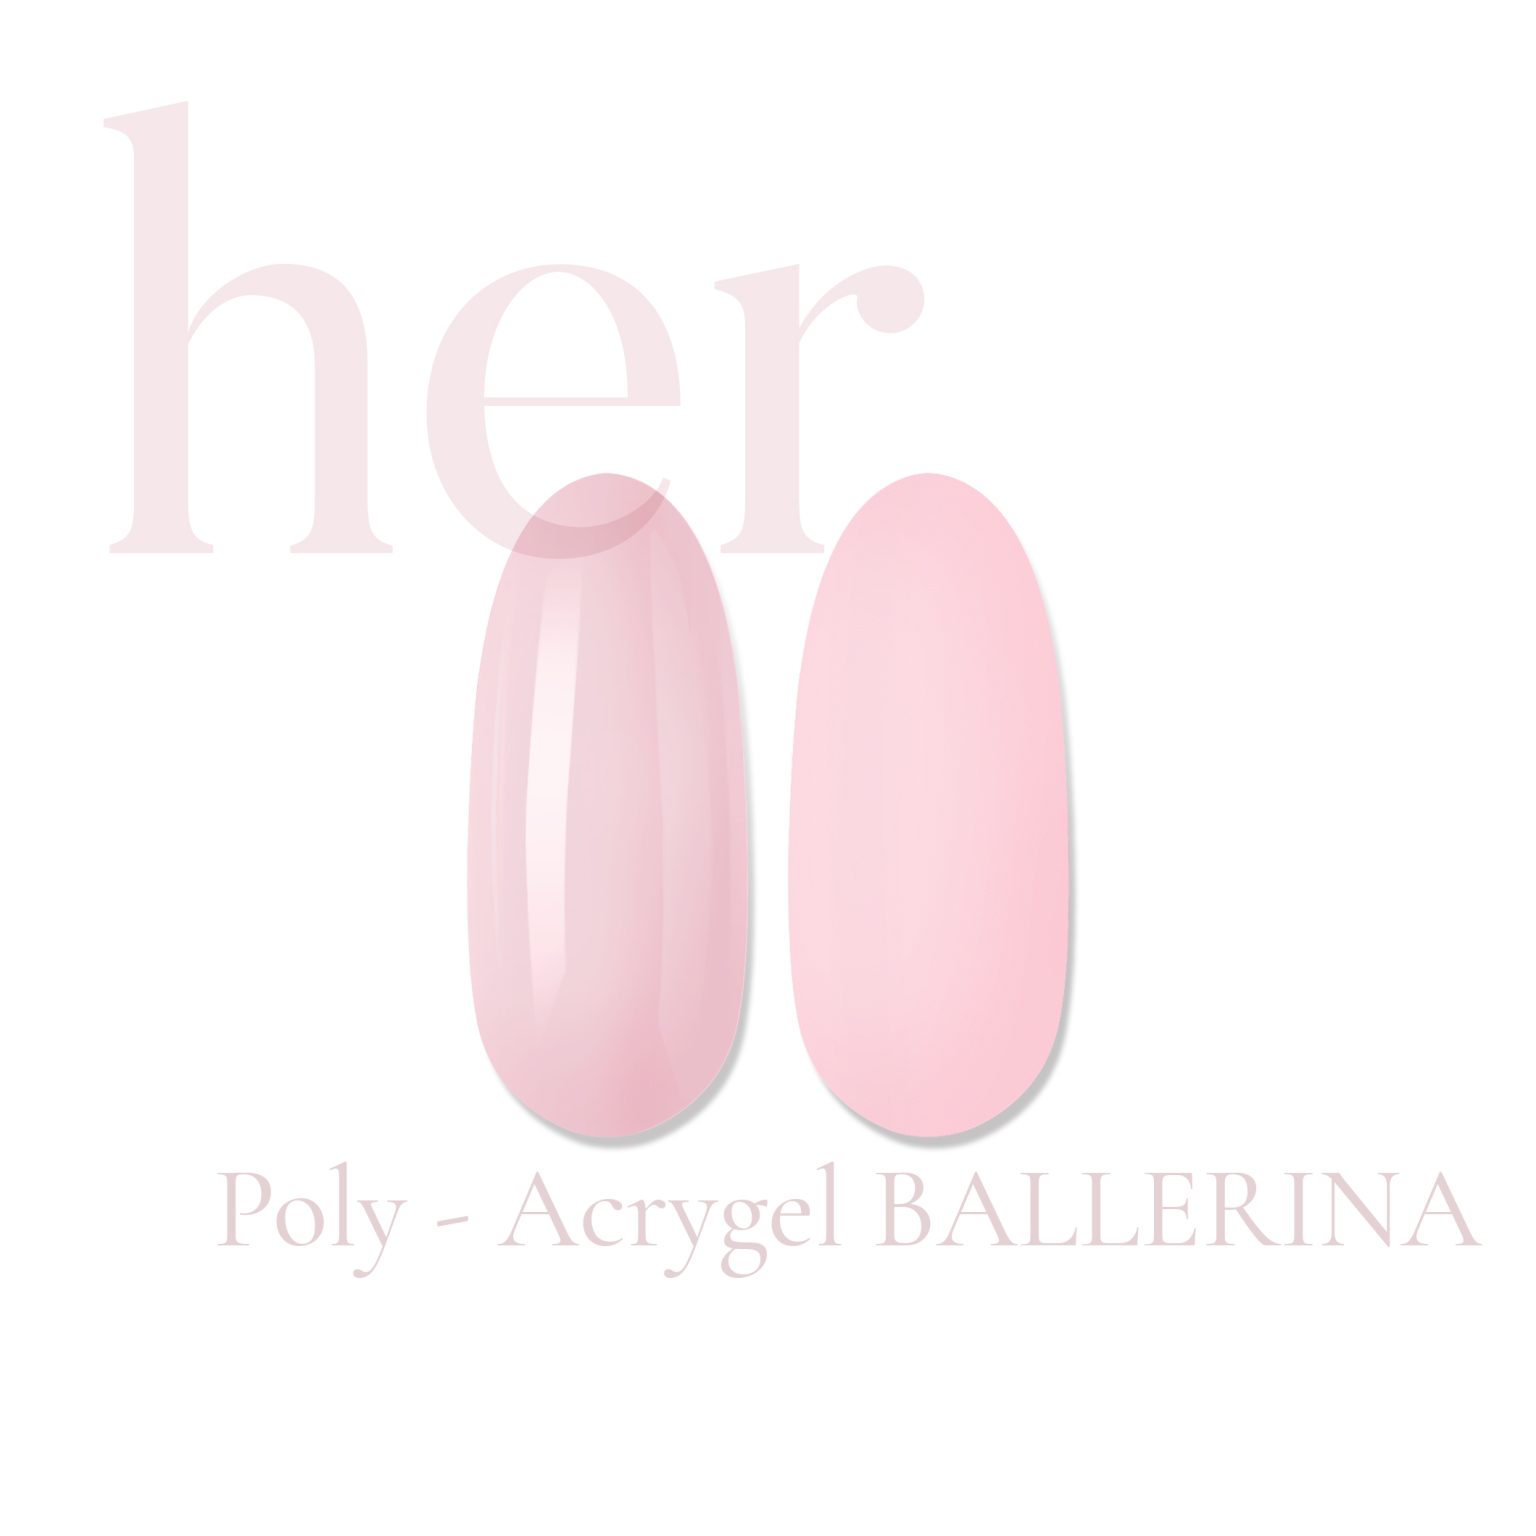 Poly-Acrygel BALLERINA